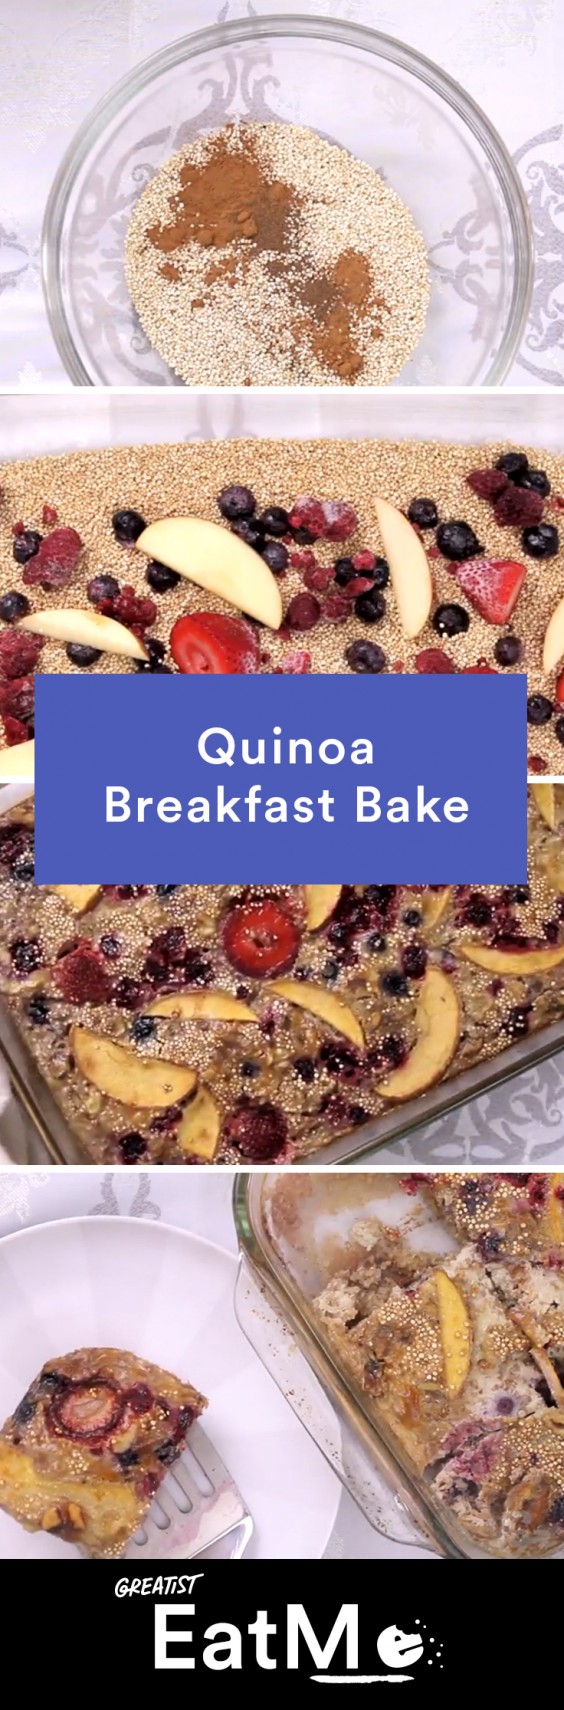 Eat Me Video: Quinoa Breakfast Bake